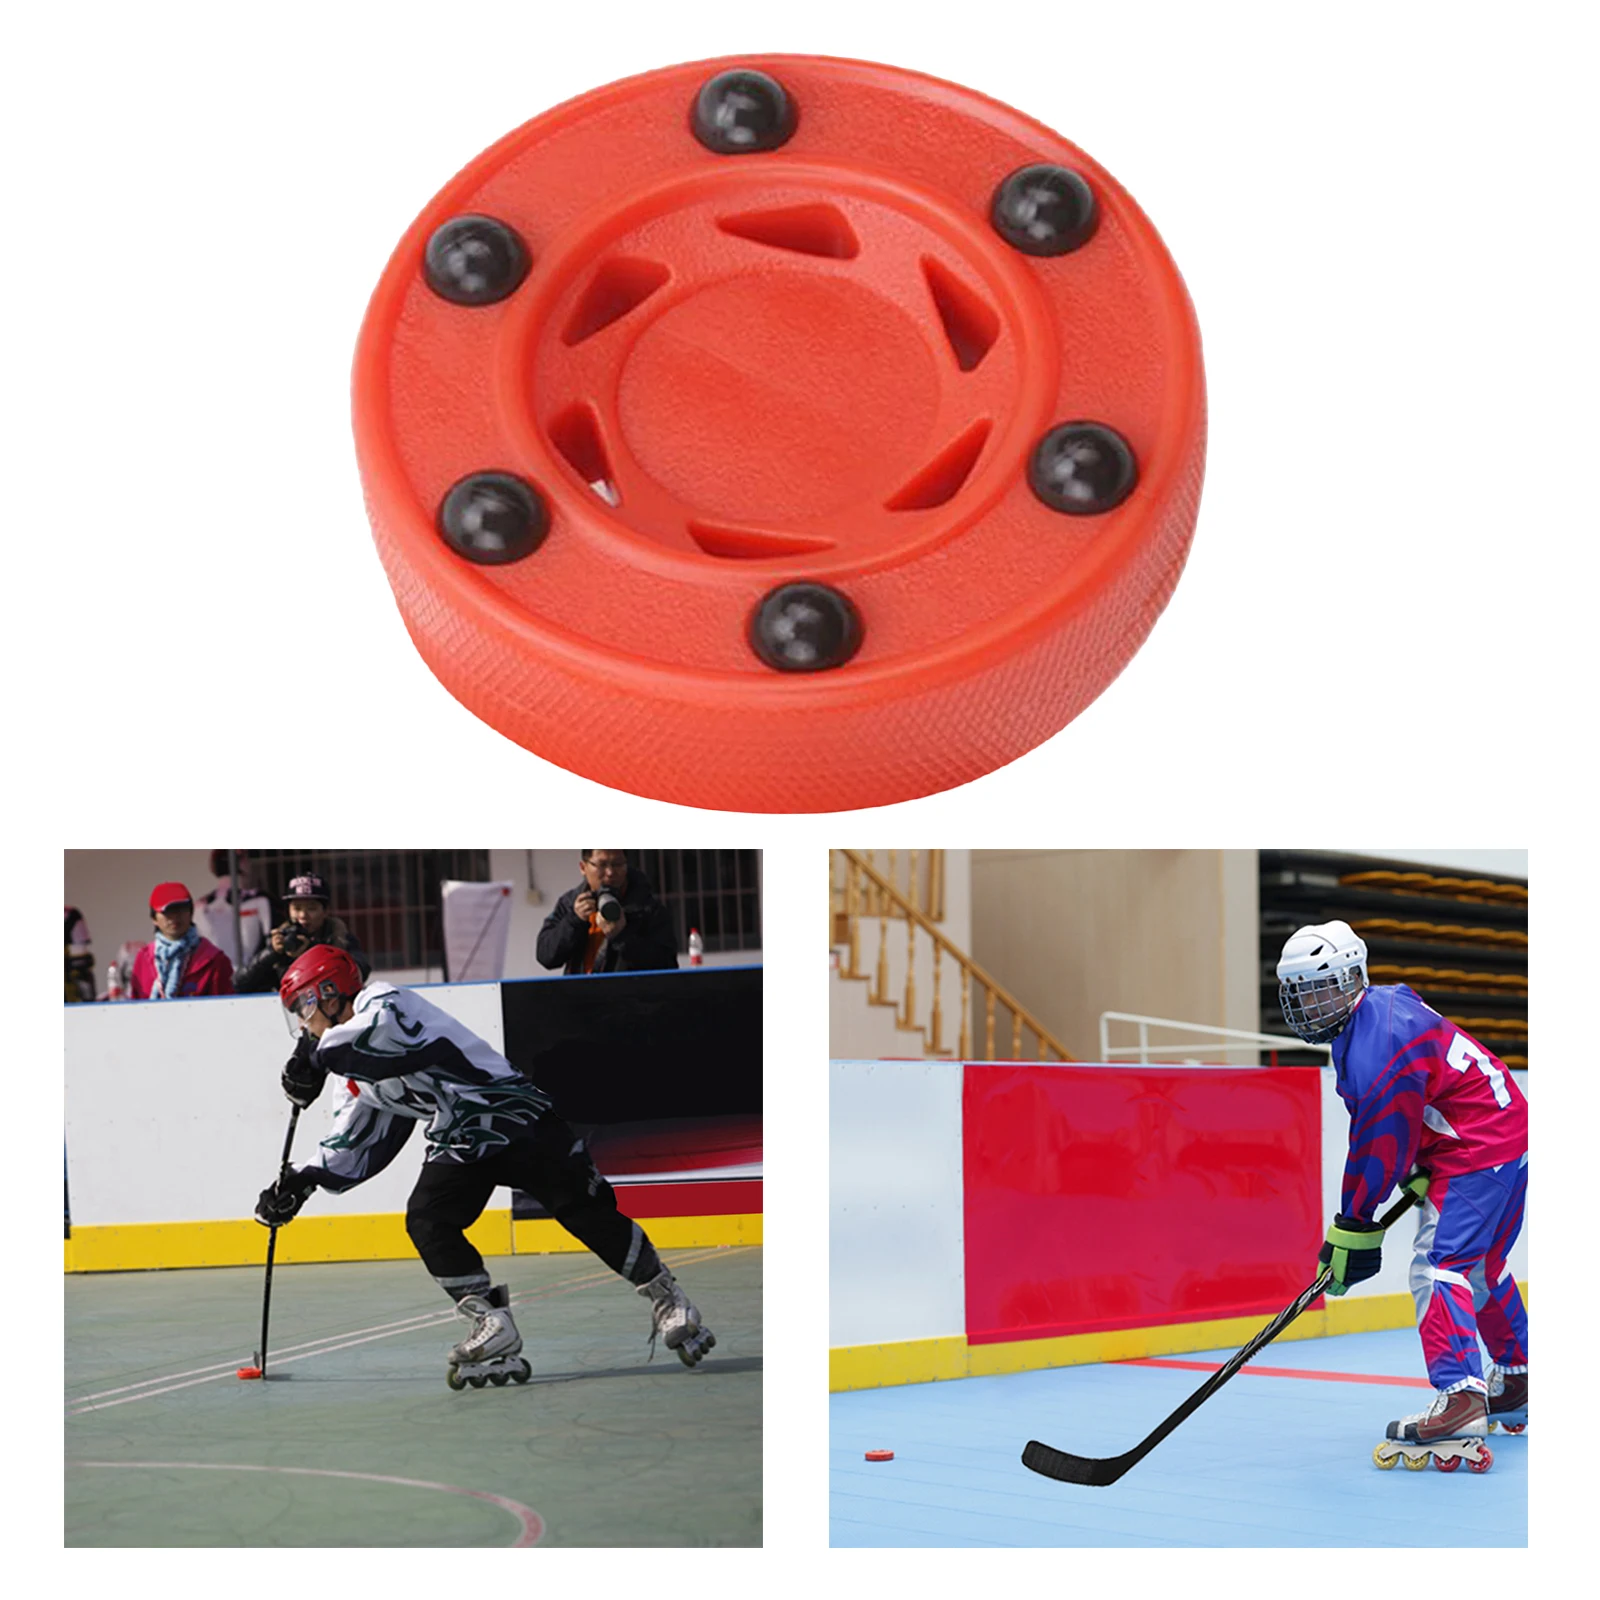 Professional Ice Hockey Pucks Roller Hockey Balls Classic Winter Sports Supplies for Street Hockey Practice Training Athletes